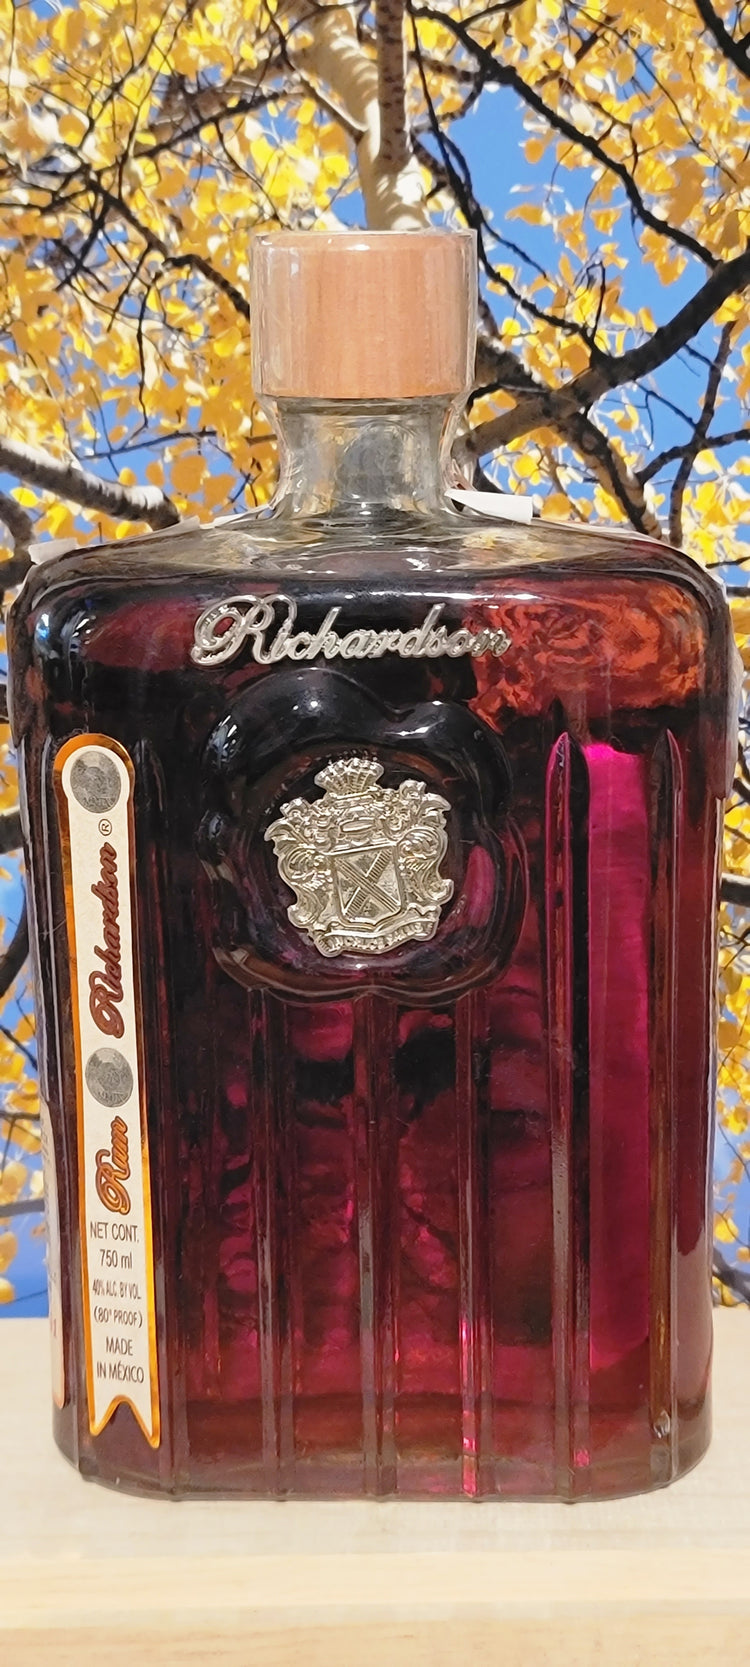 Richardson rum